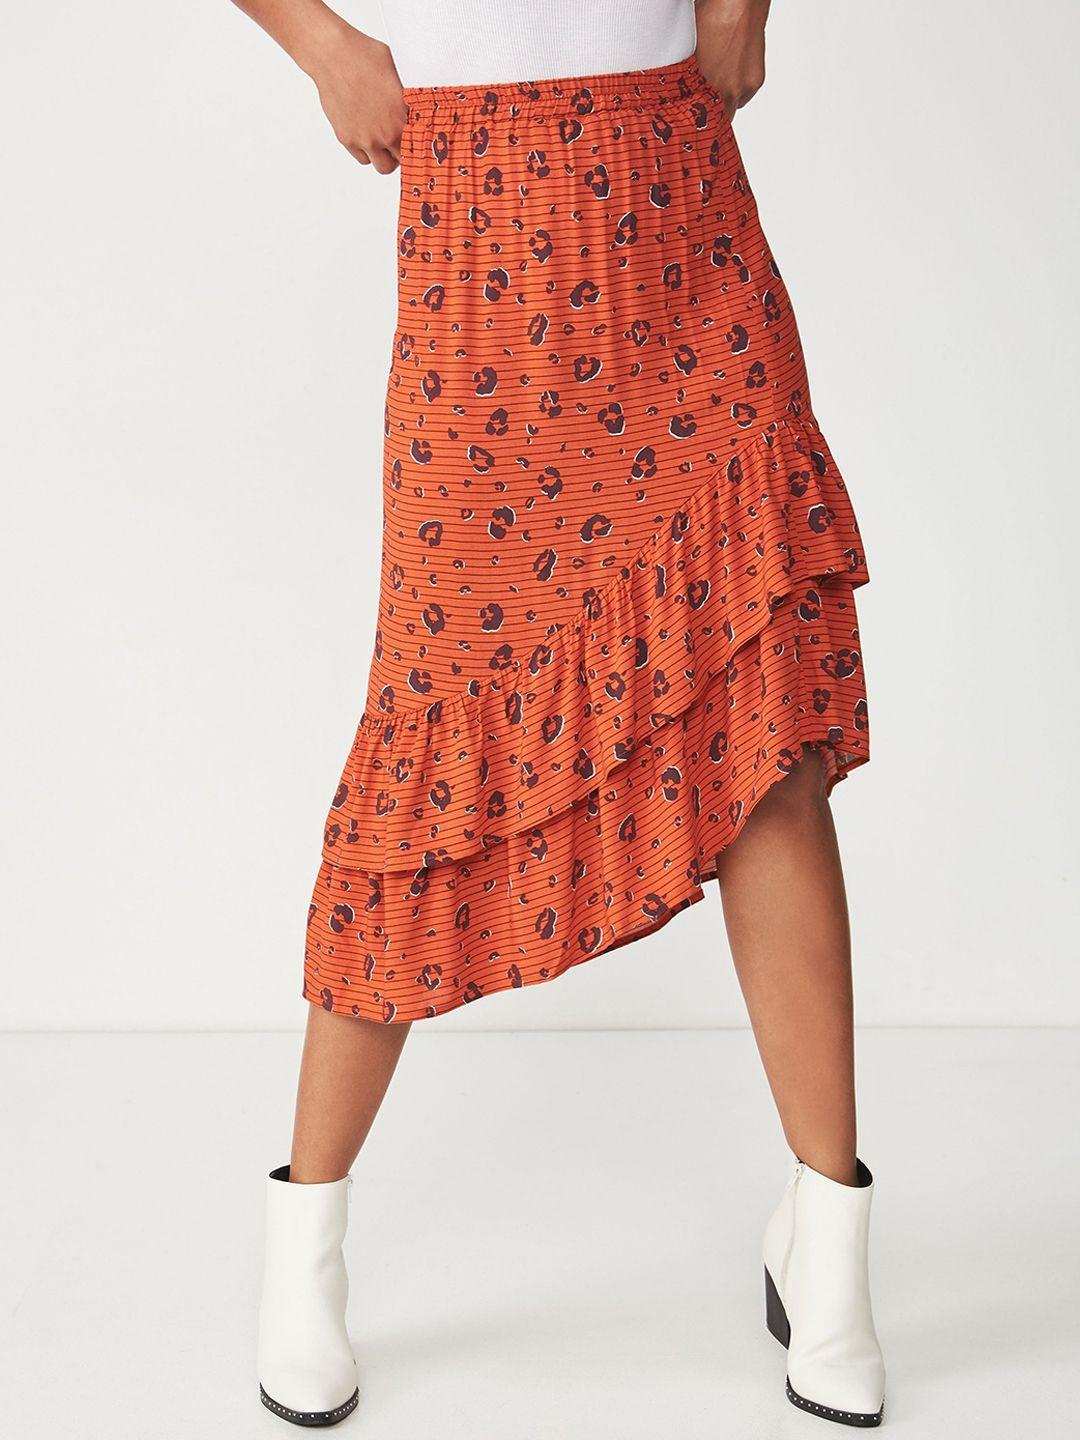 cotton on women orange & brown animal printed a-line skirt